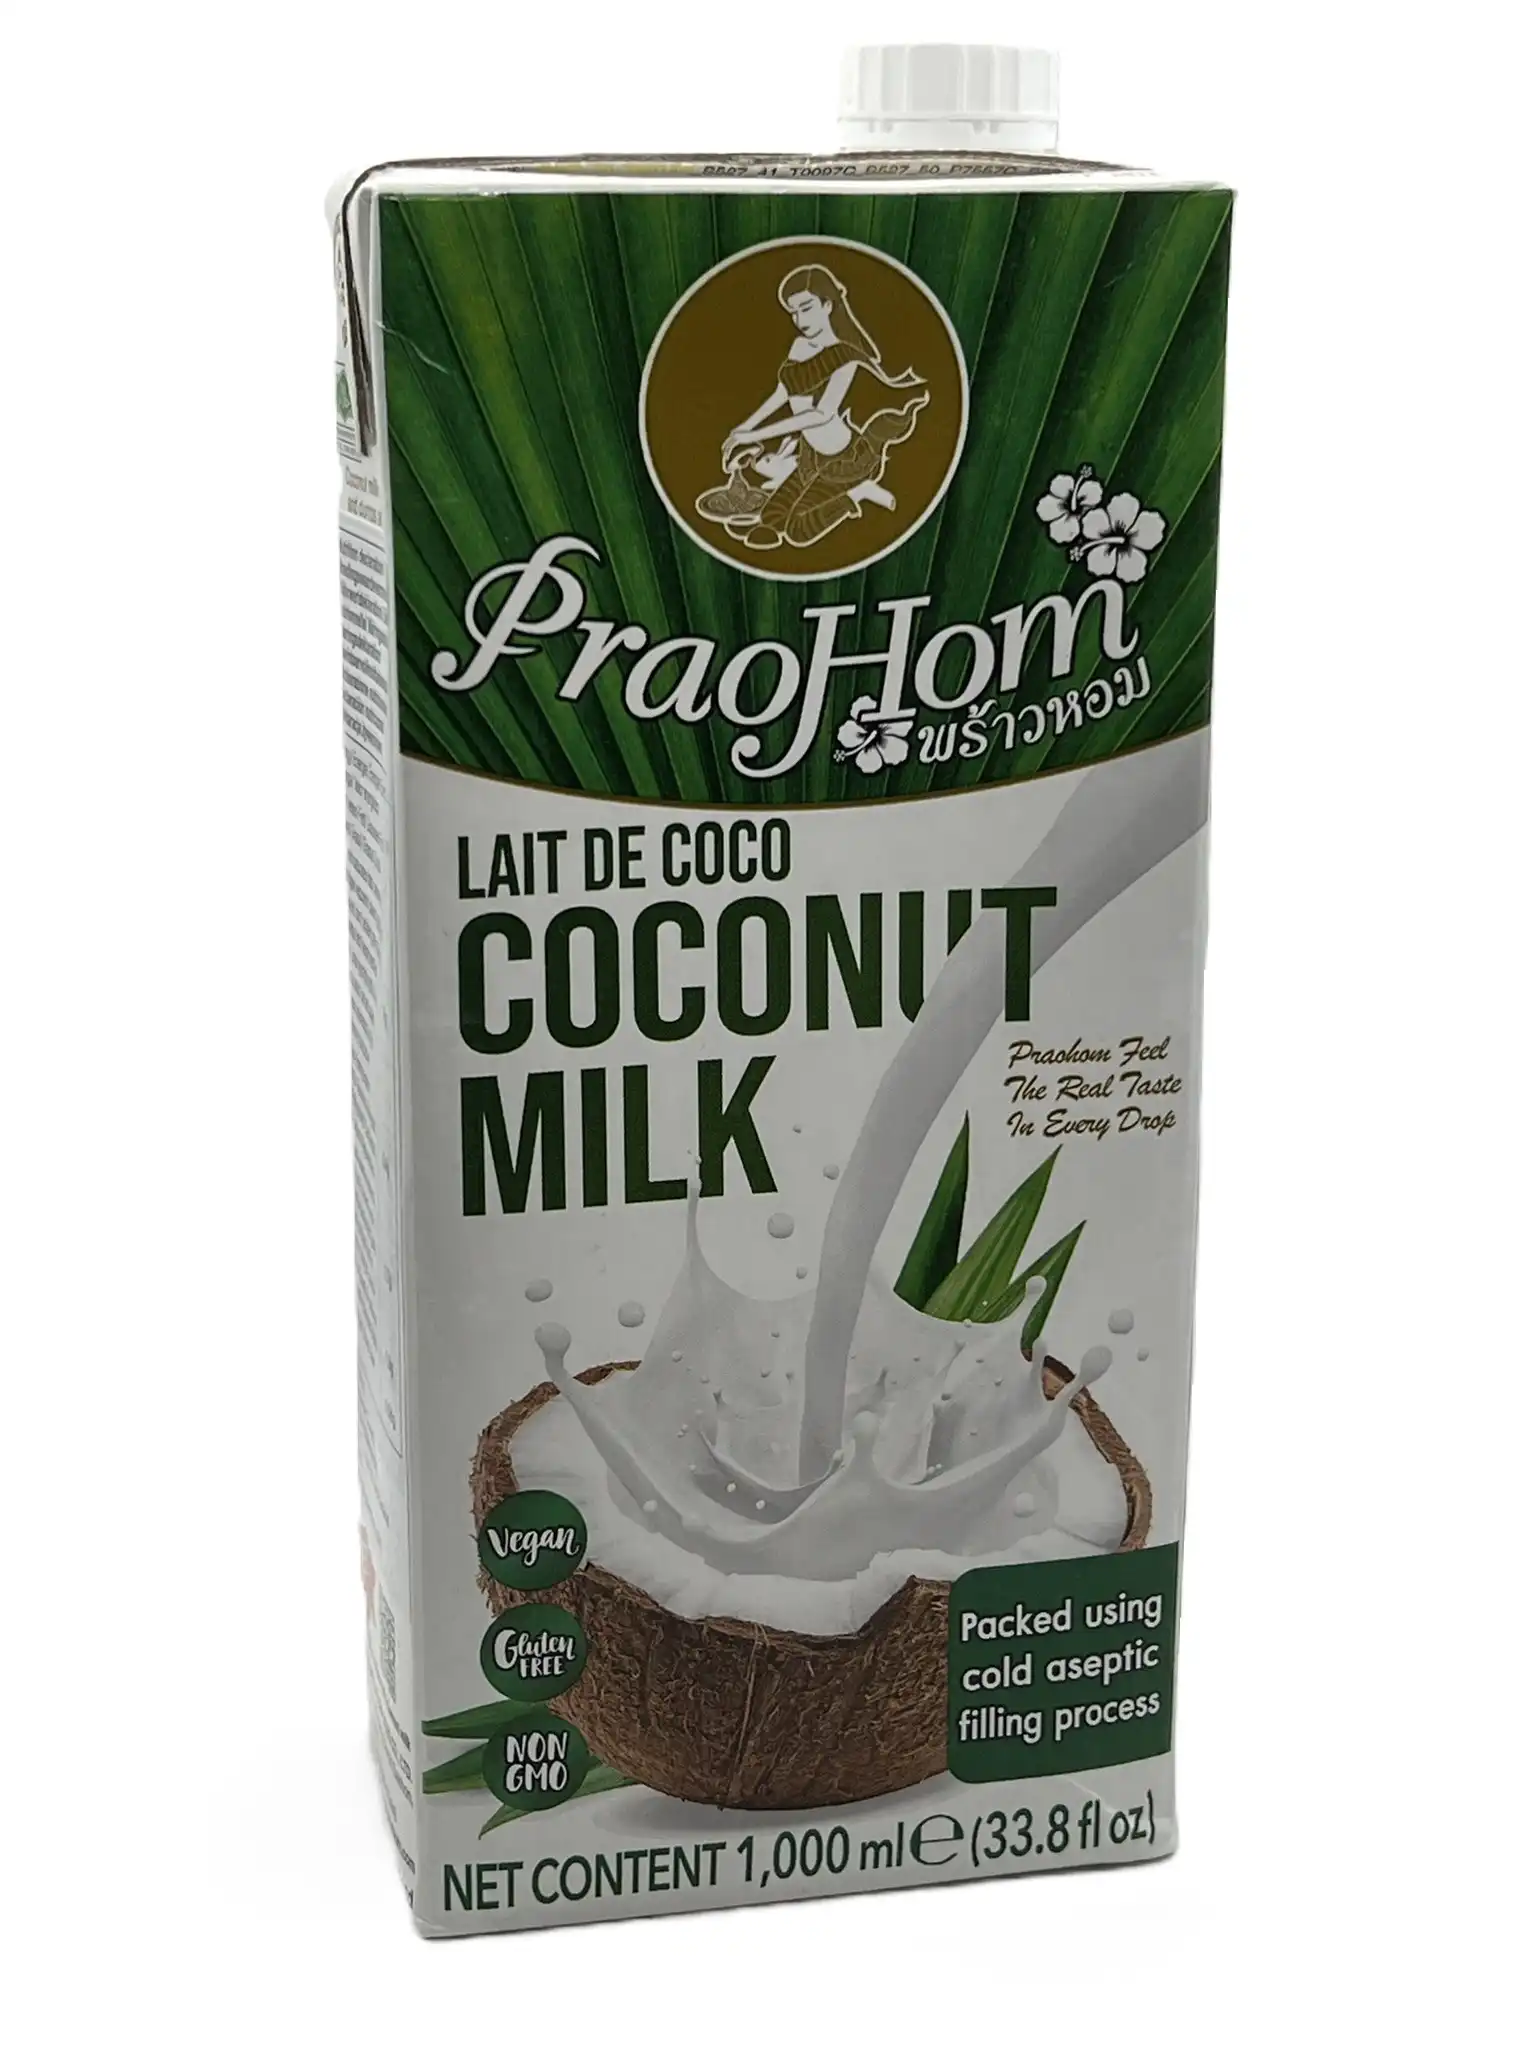 Lait de coco coconut milk